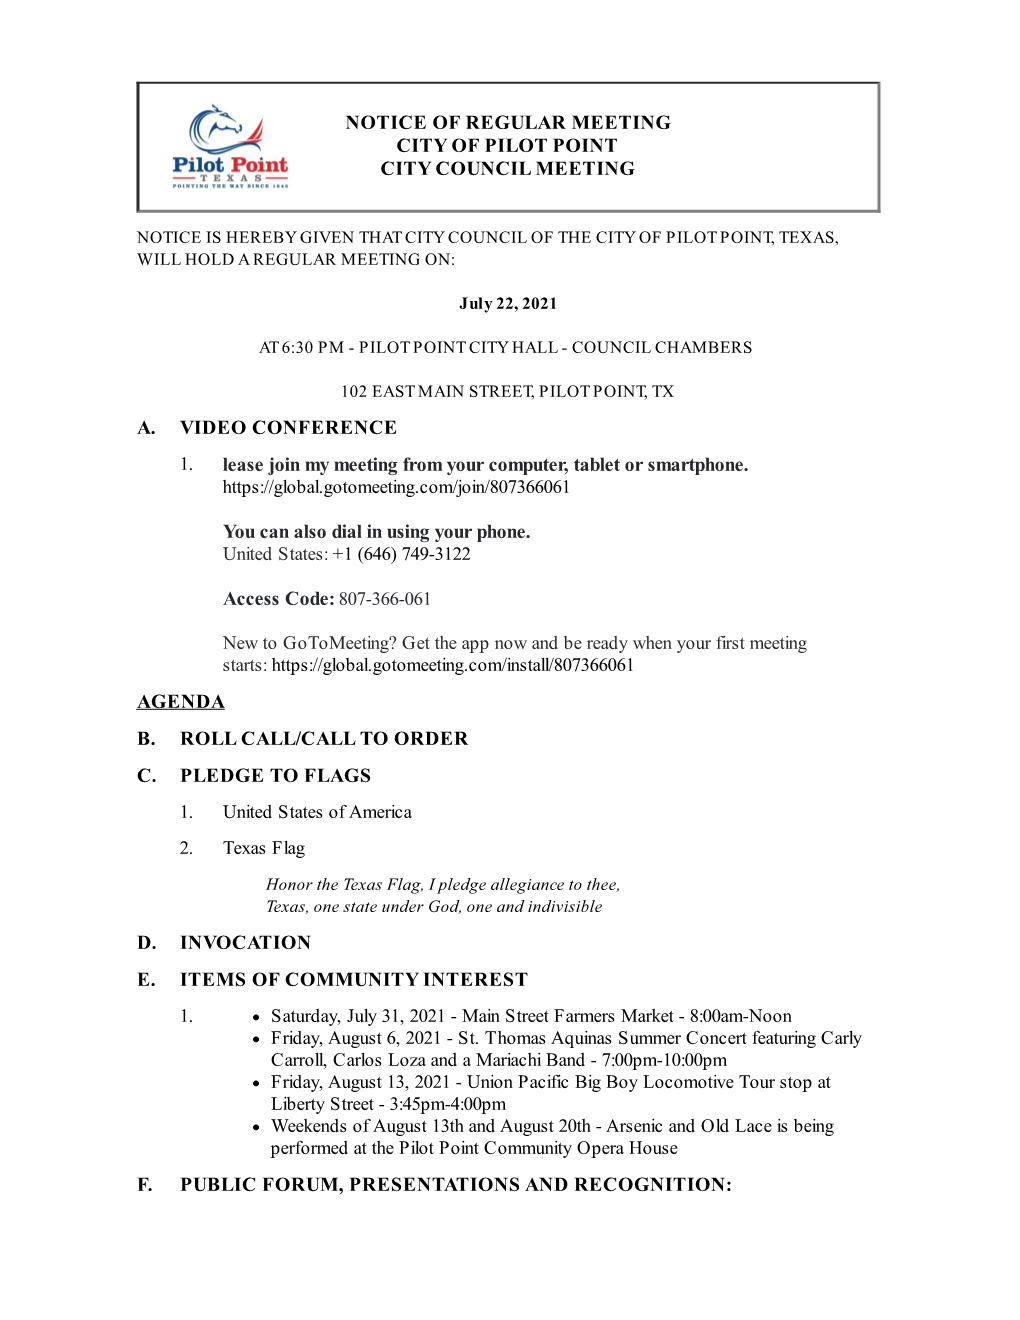 City Council Regular Meeting Agenda Packet